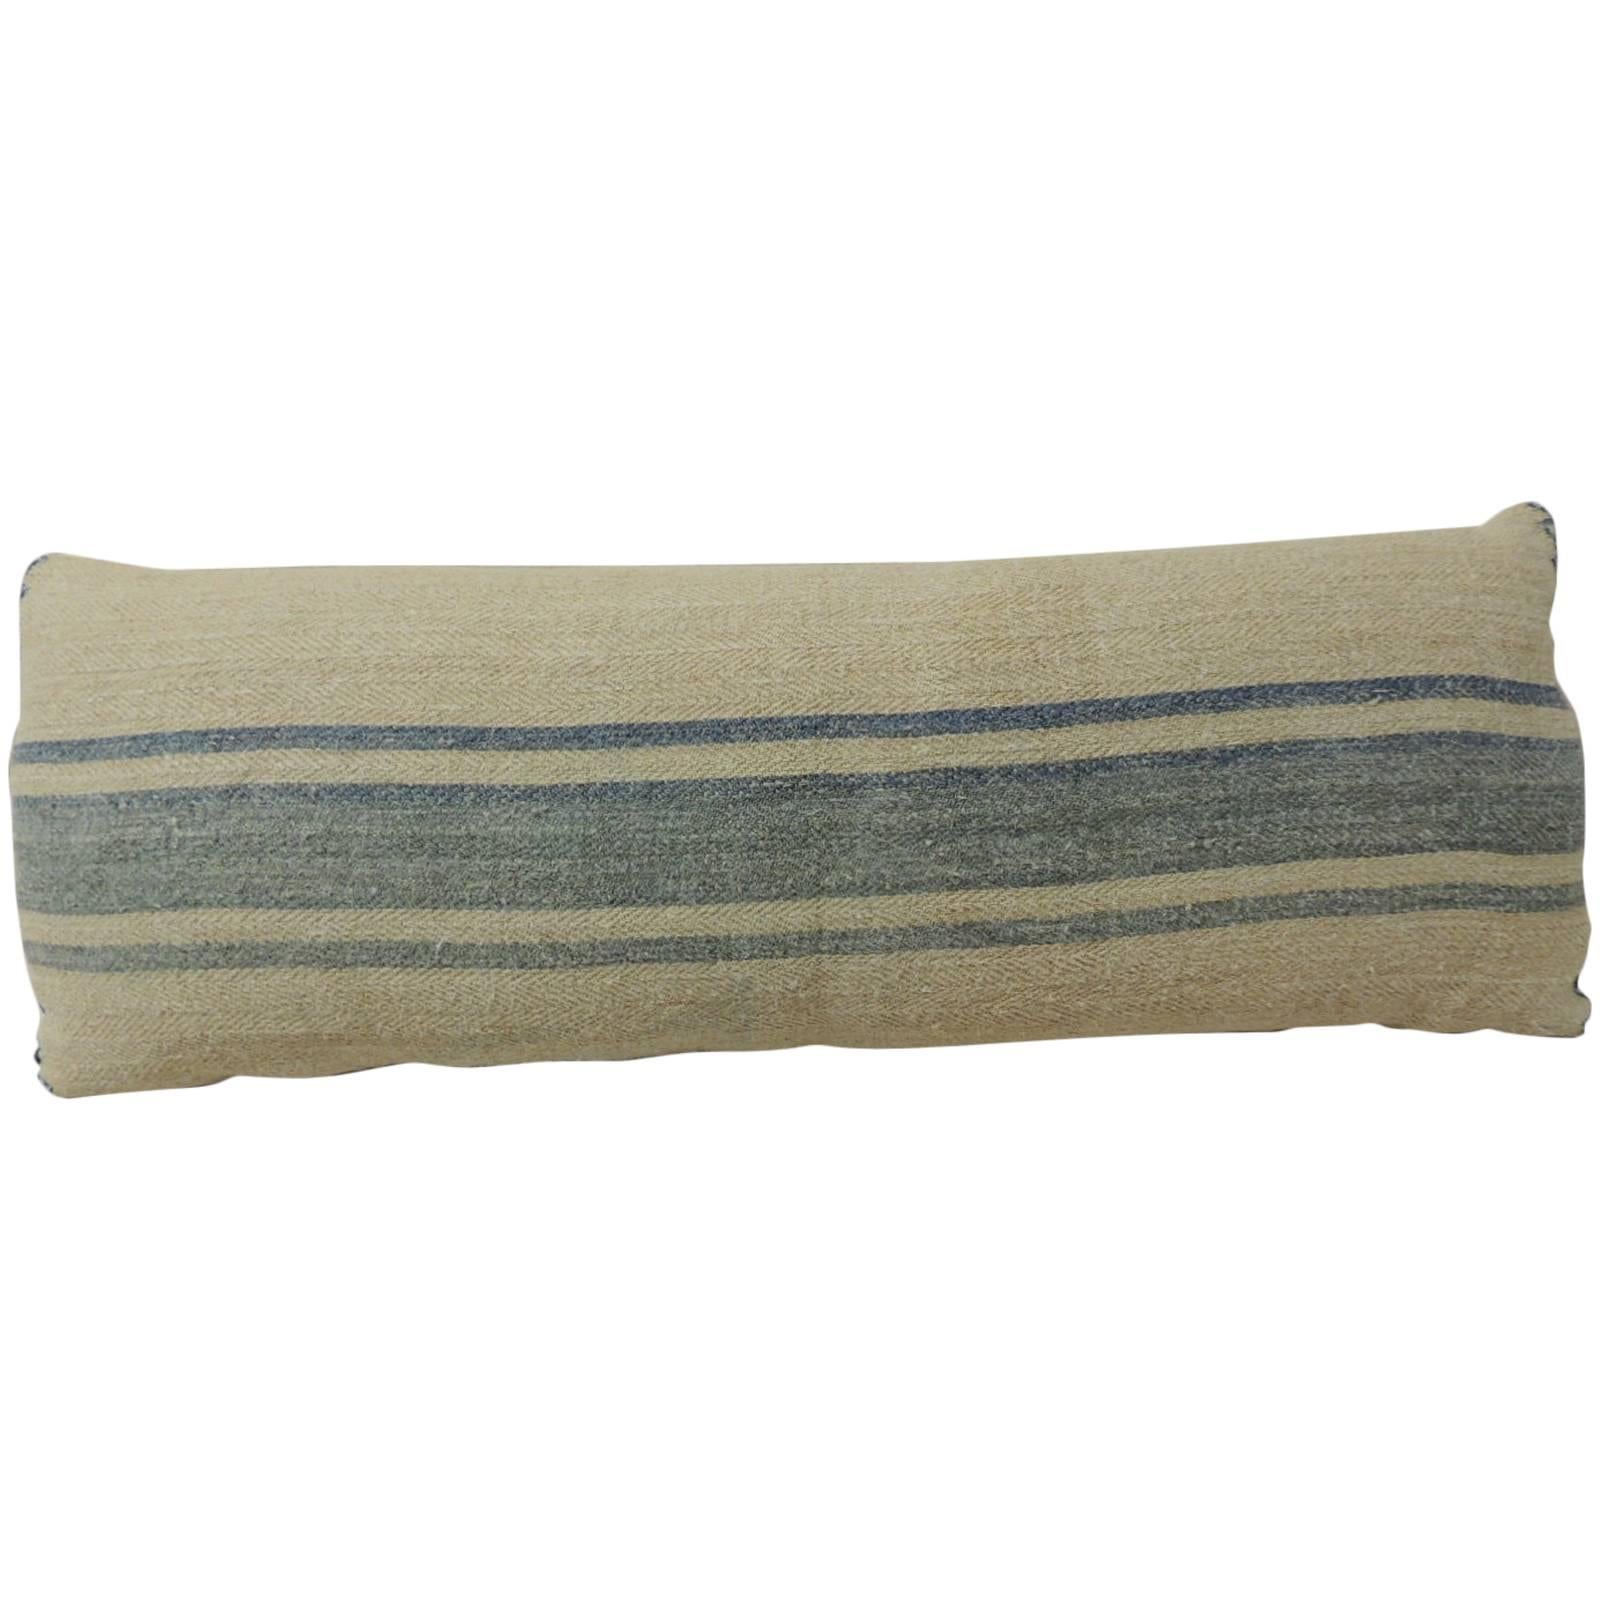 Long 19th Century French Linen Home-Spun Bolster Decorative Pillow